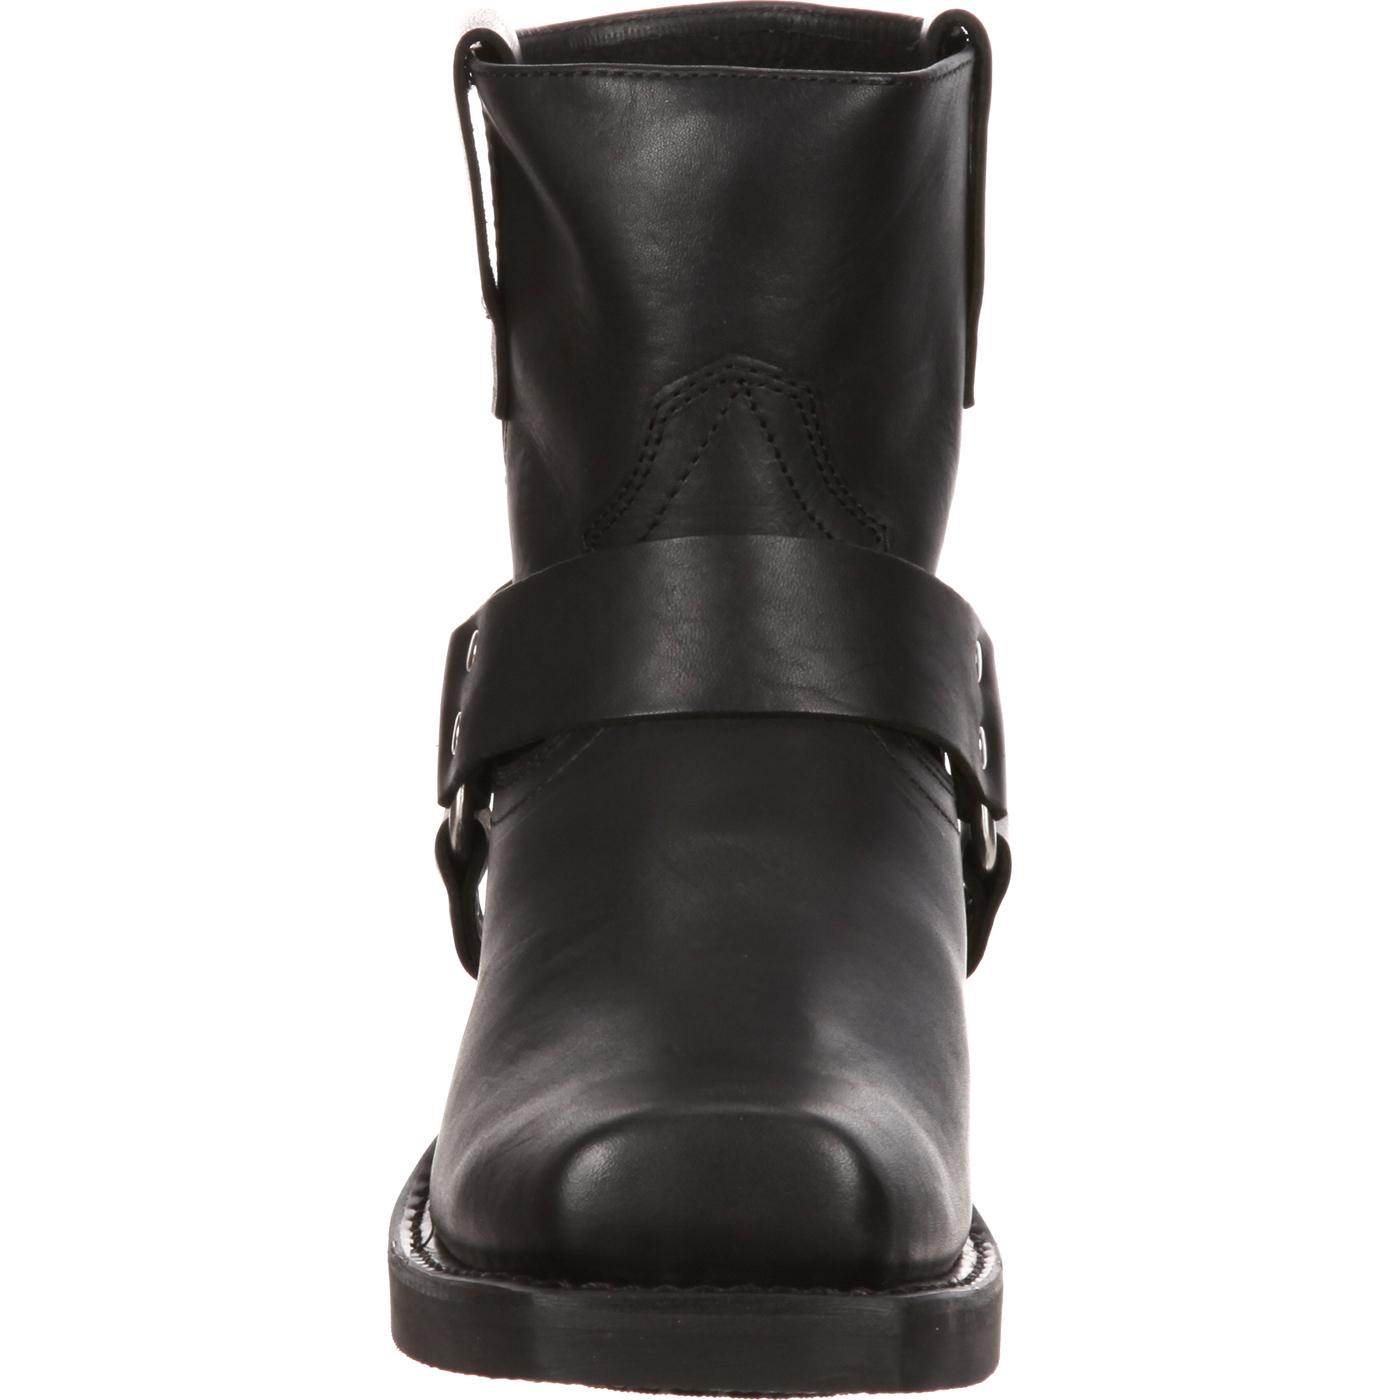 Durango Boots #DB710 - Men's Black Leather Harness Boots